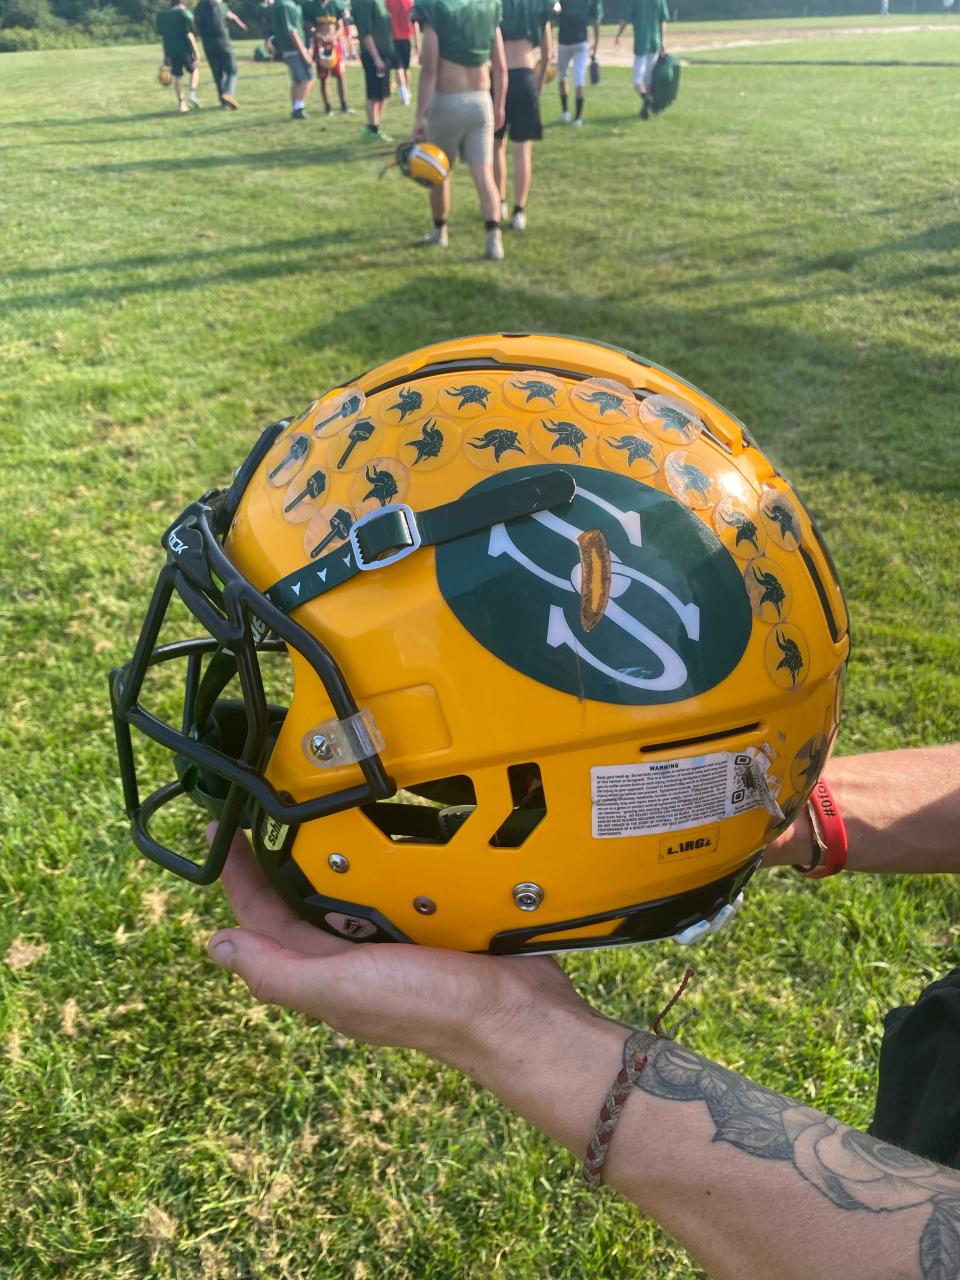 South Shore Tech's Todd Egan's helmet